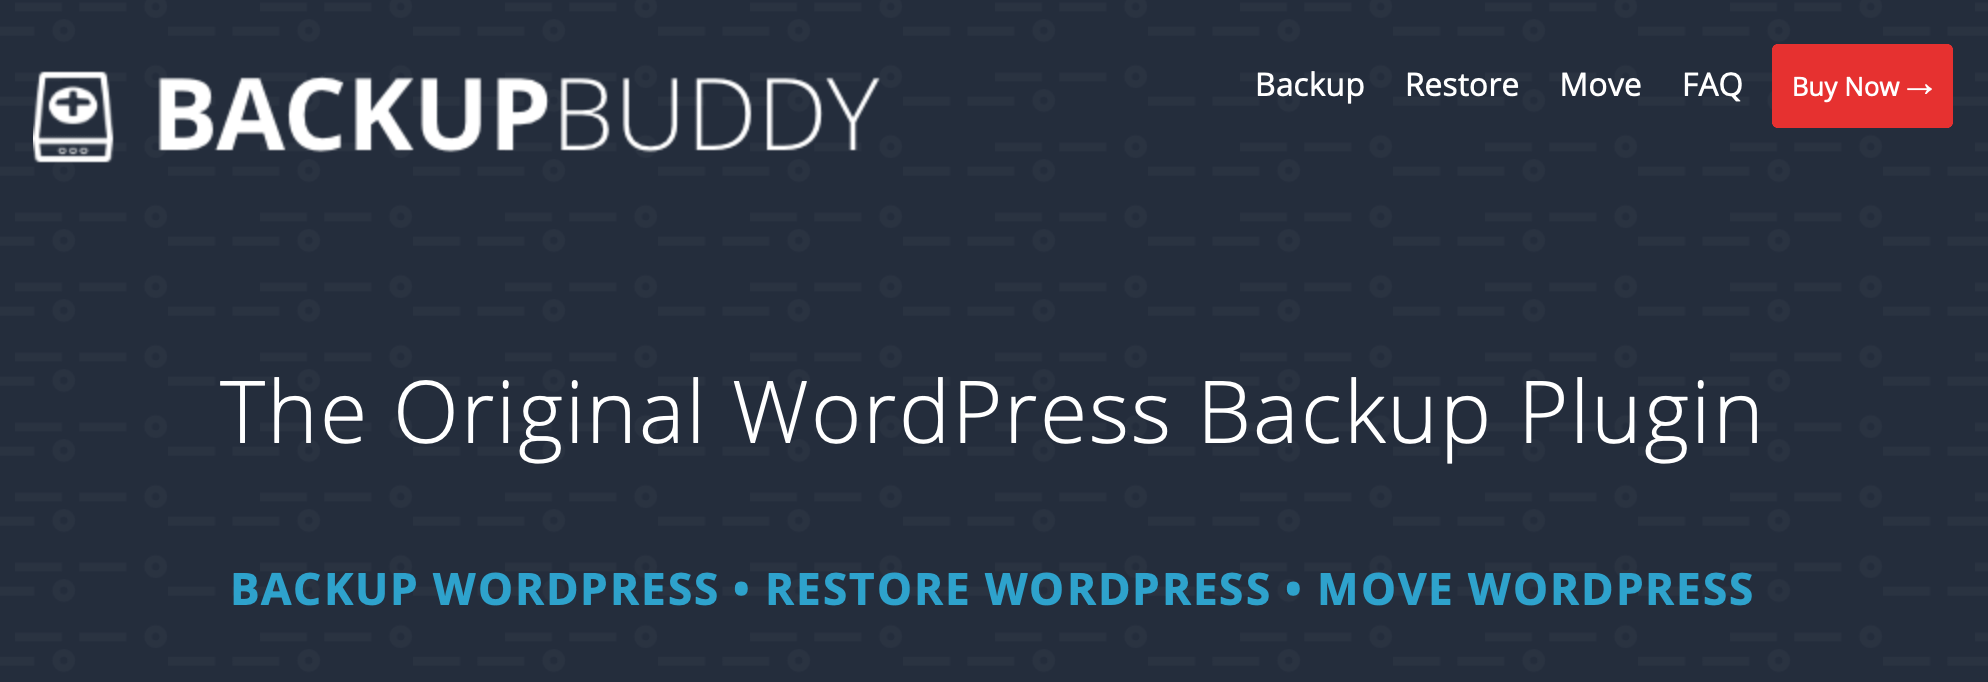 BackupBuddy is one of the best VaultPress alternatives